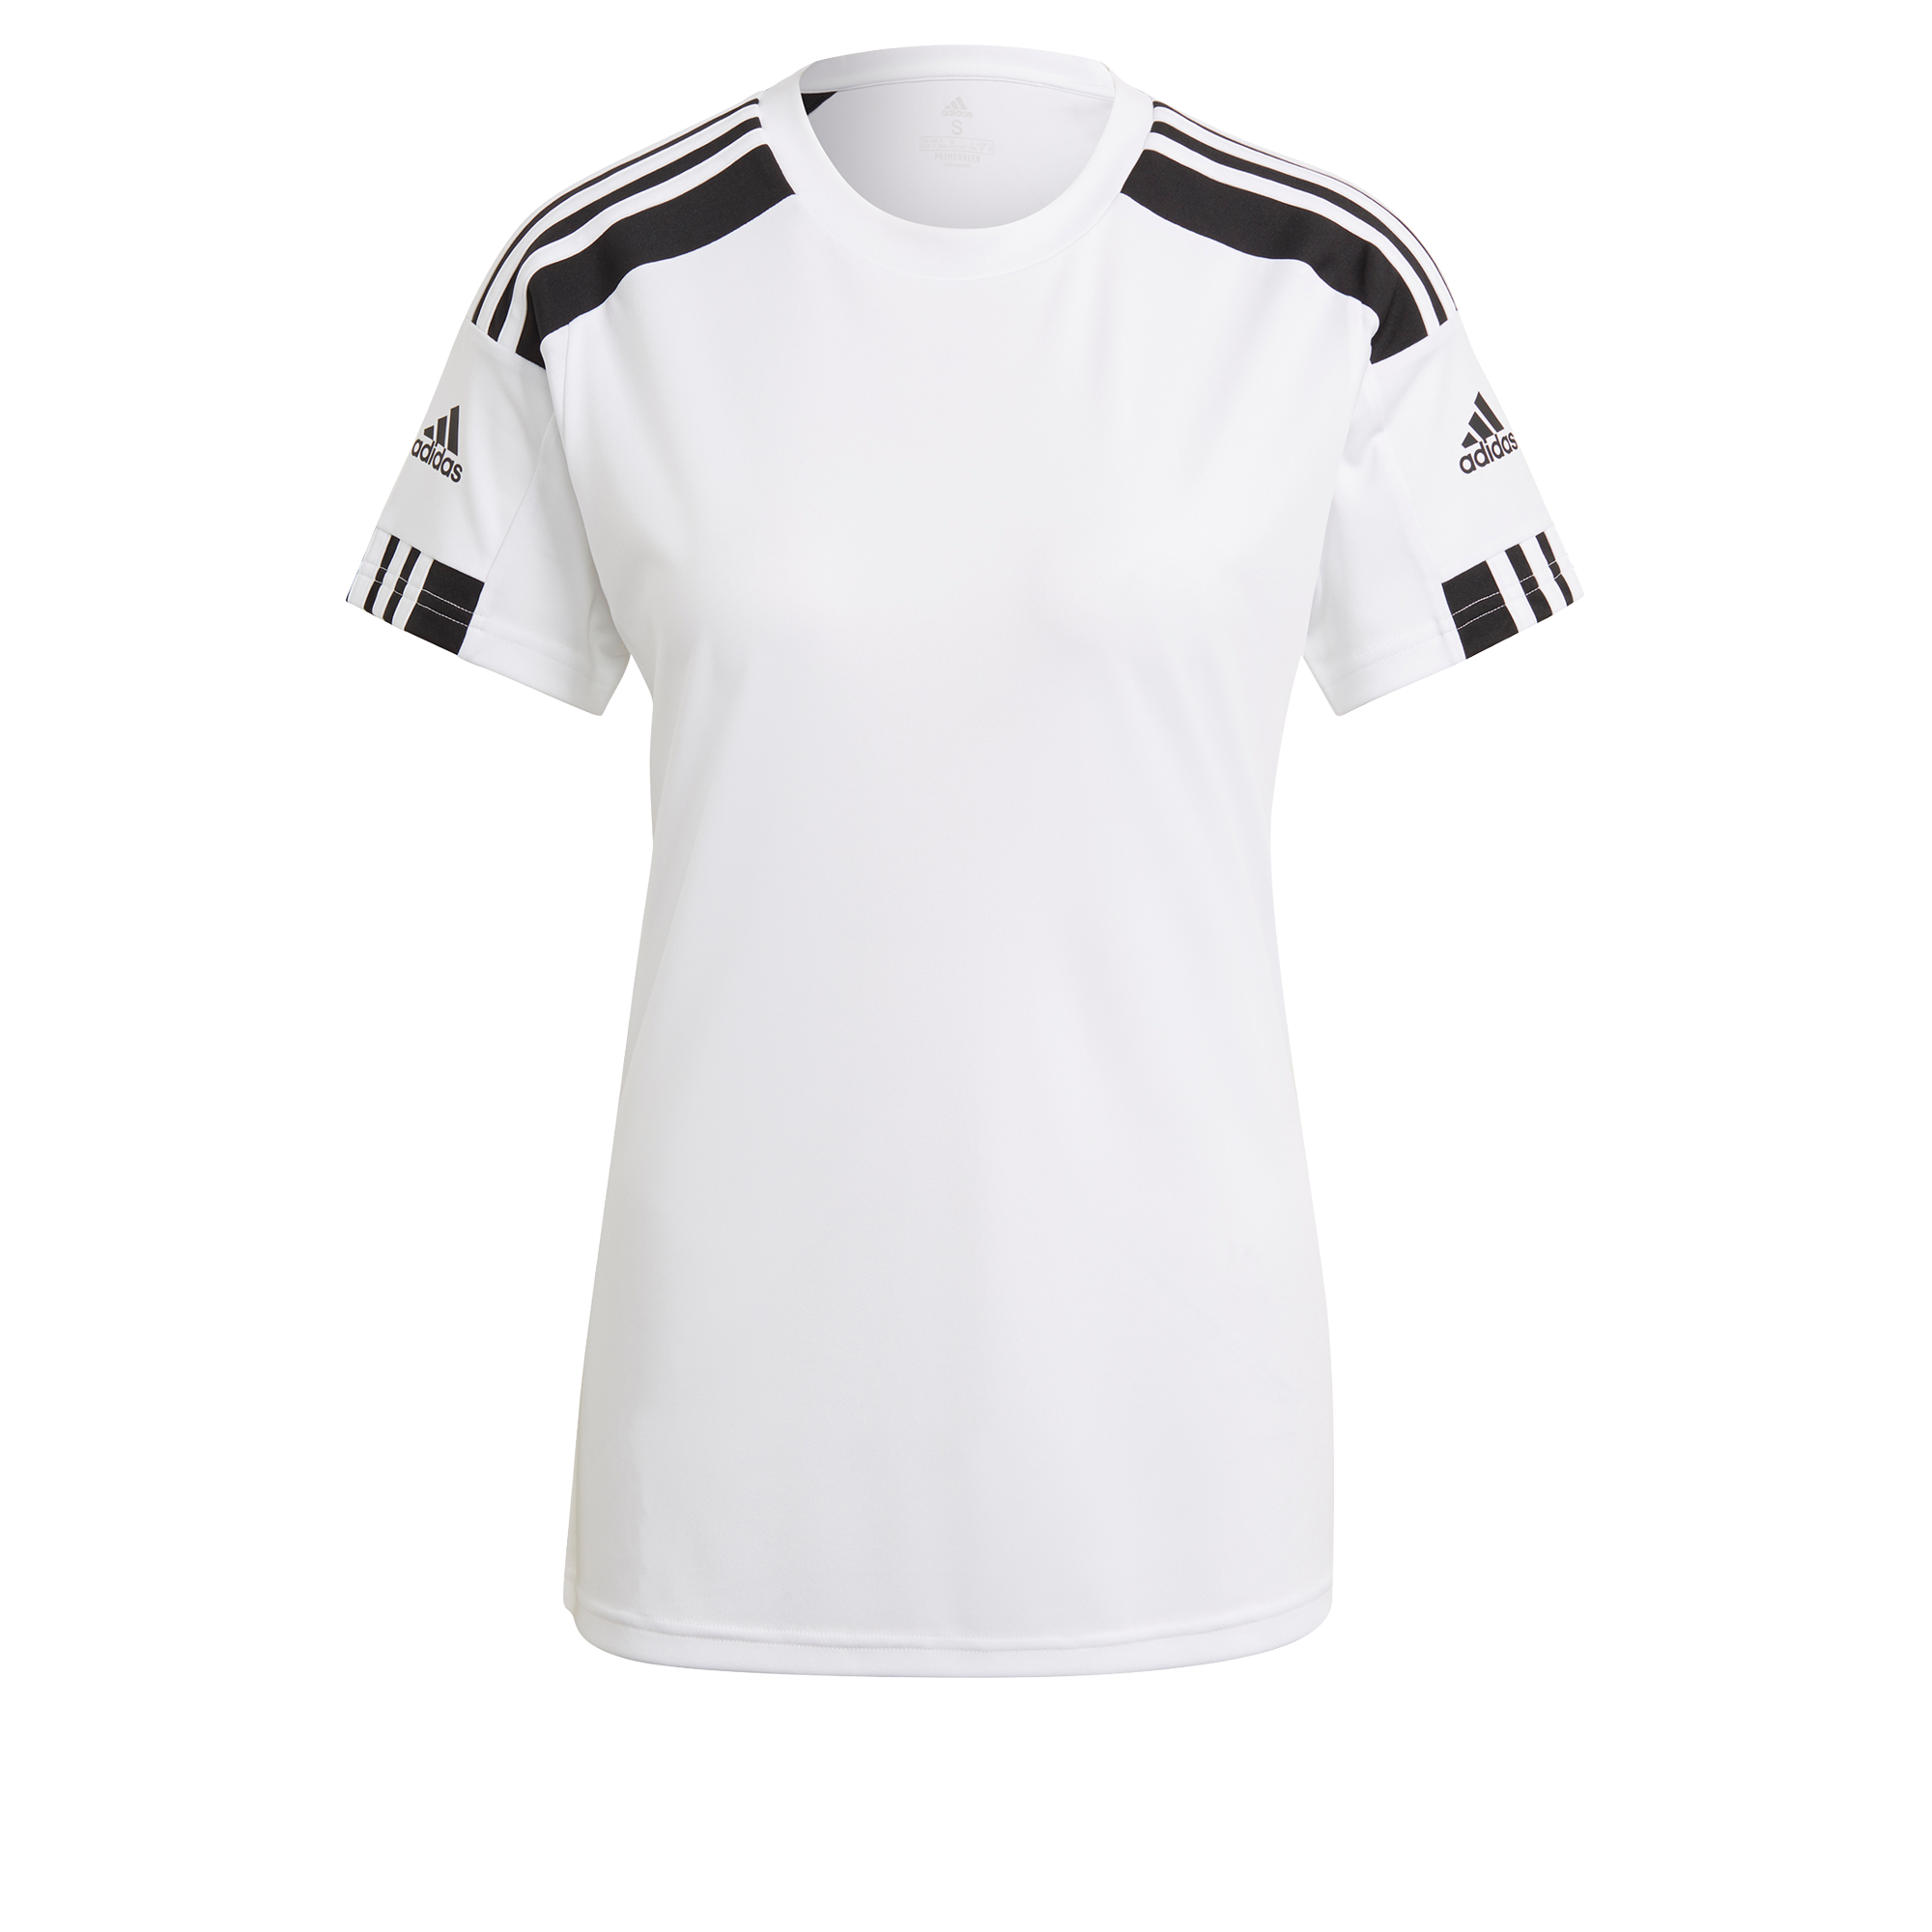 MHPC White T-shirt Womens